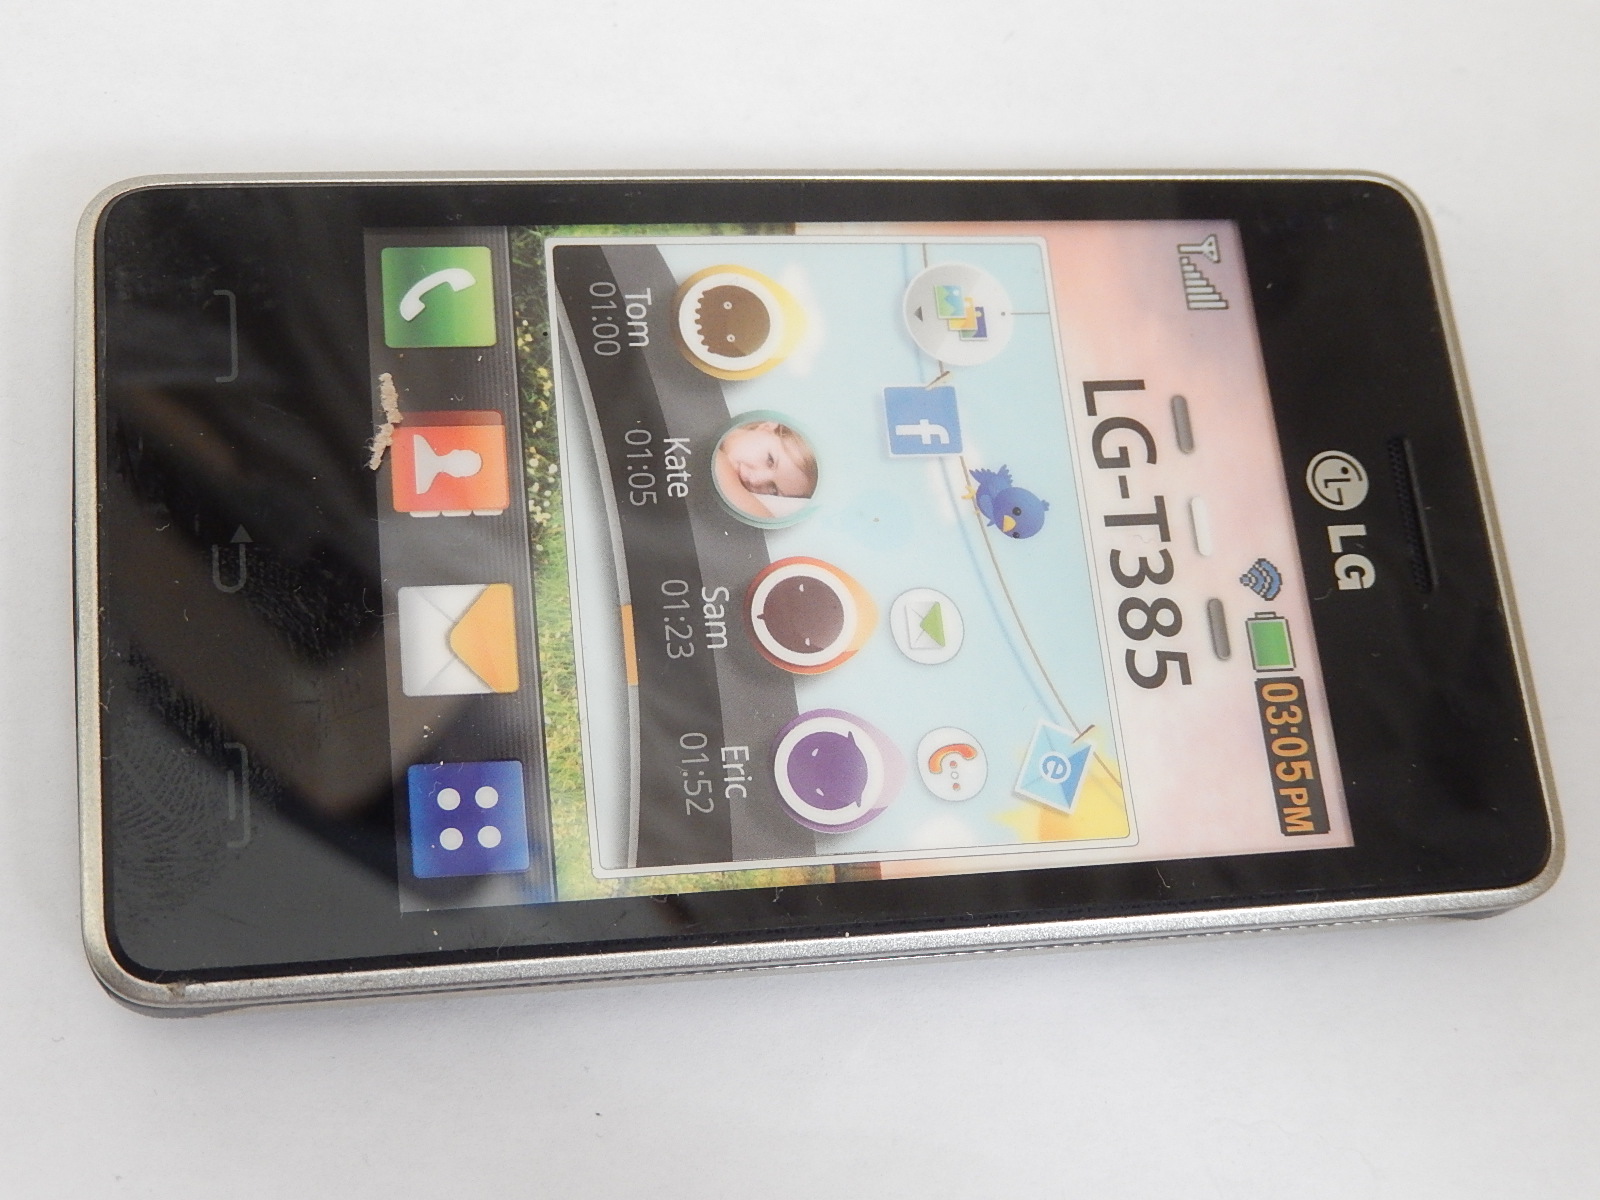 LG T385 SMARTPHONE FACTICE